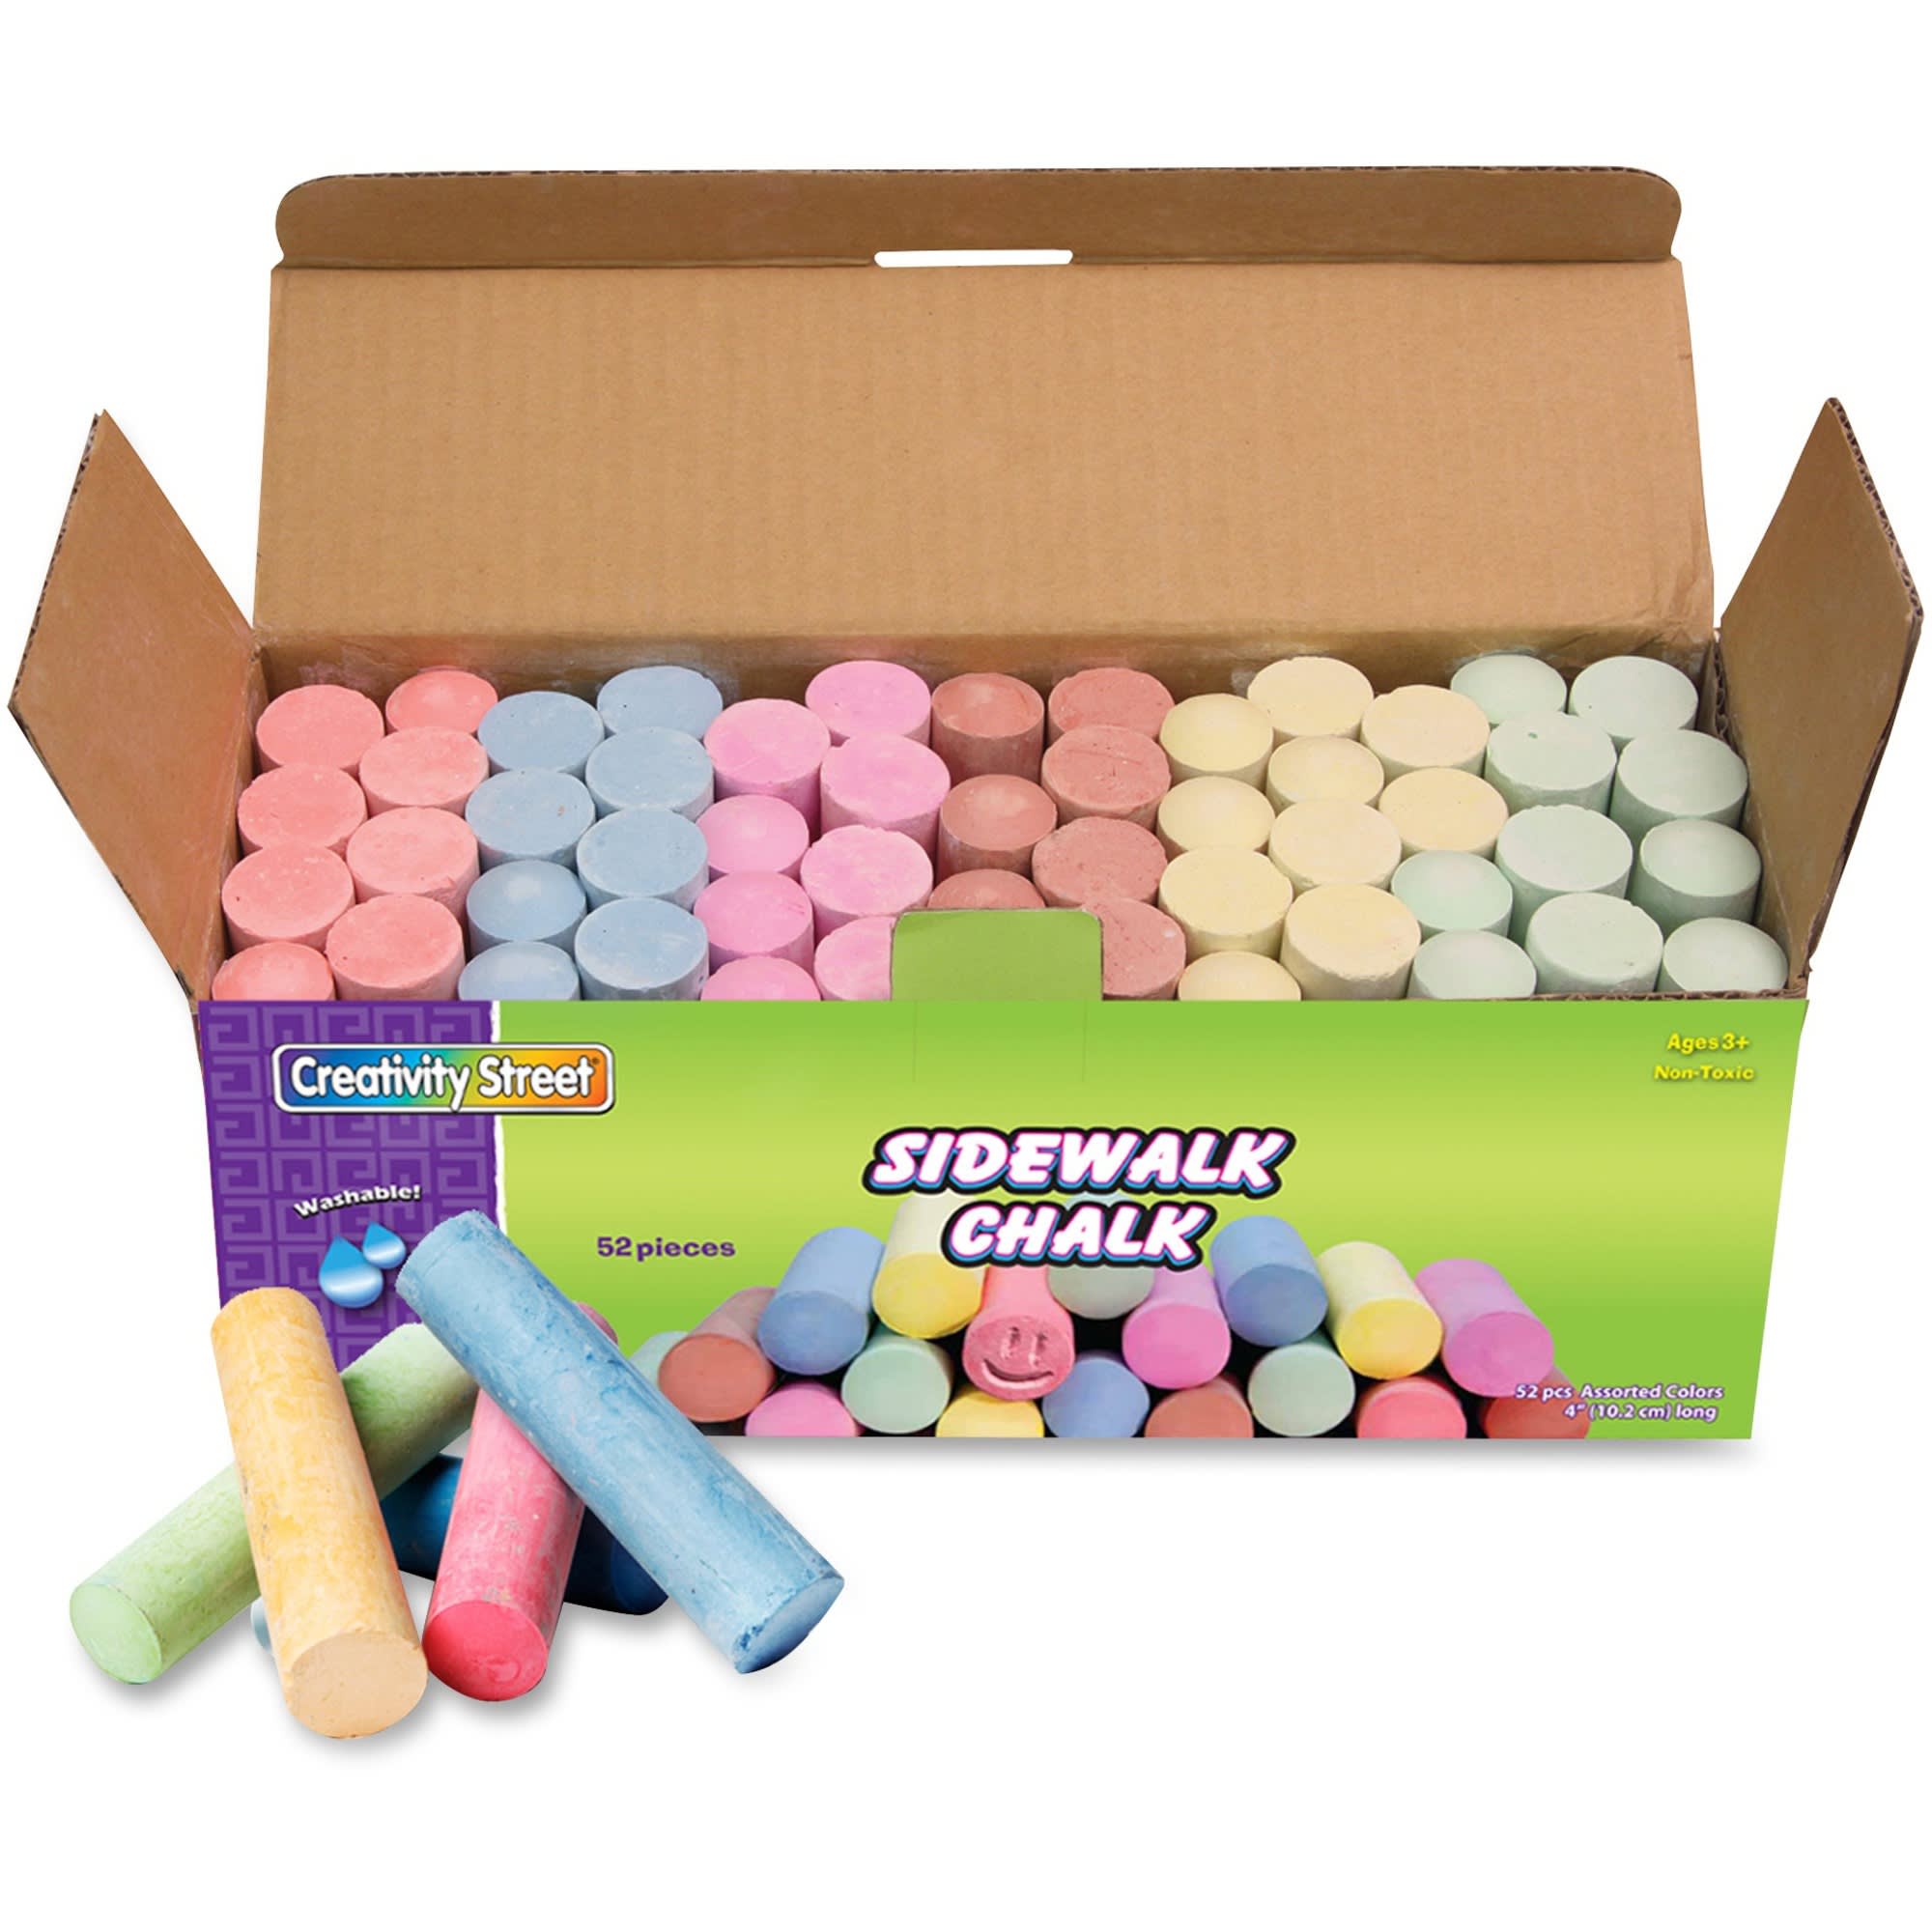 Crayola Anti Dust Chalk White Box Of 12 Sticks - Office Depot